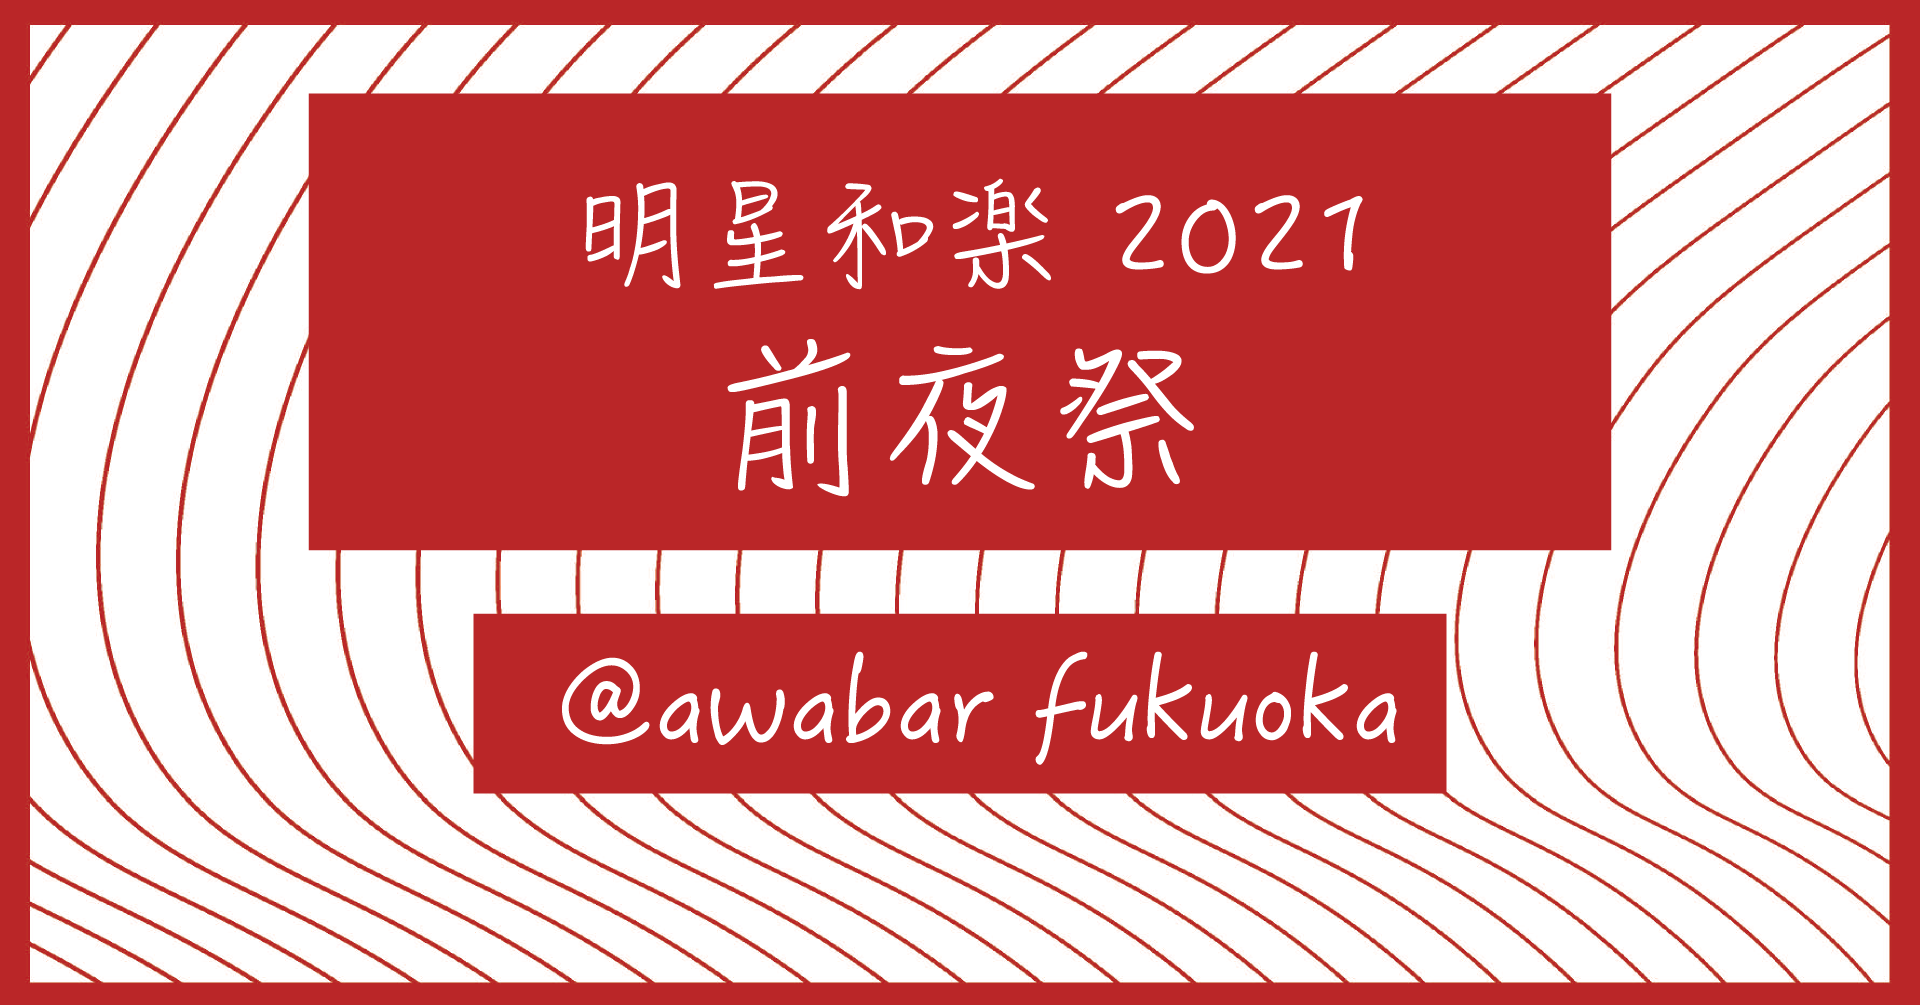 明星和楽2021 前夜祭@awabar fukuoka